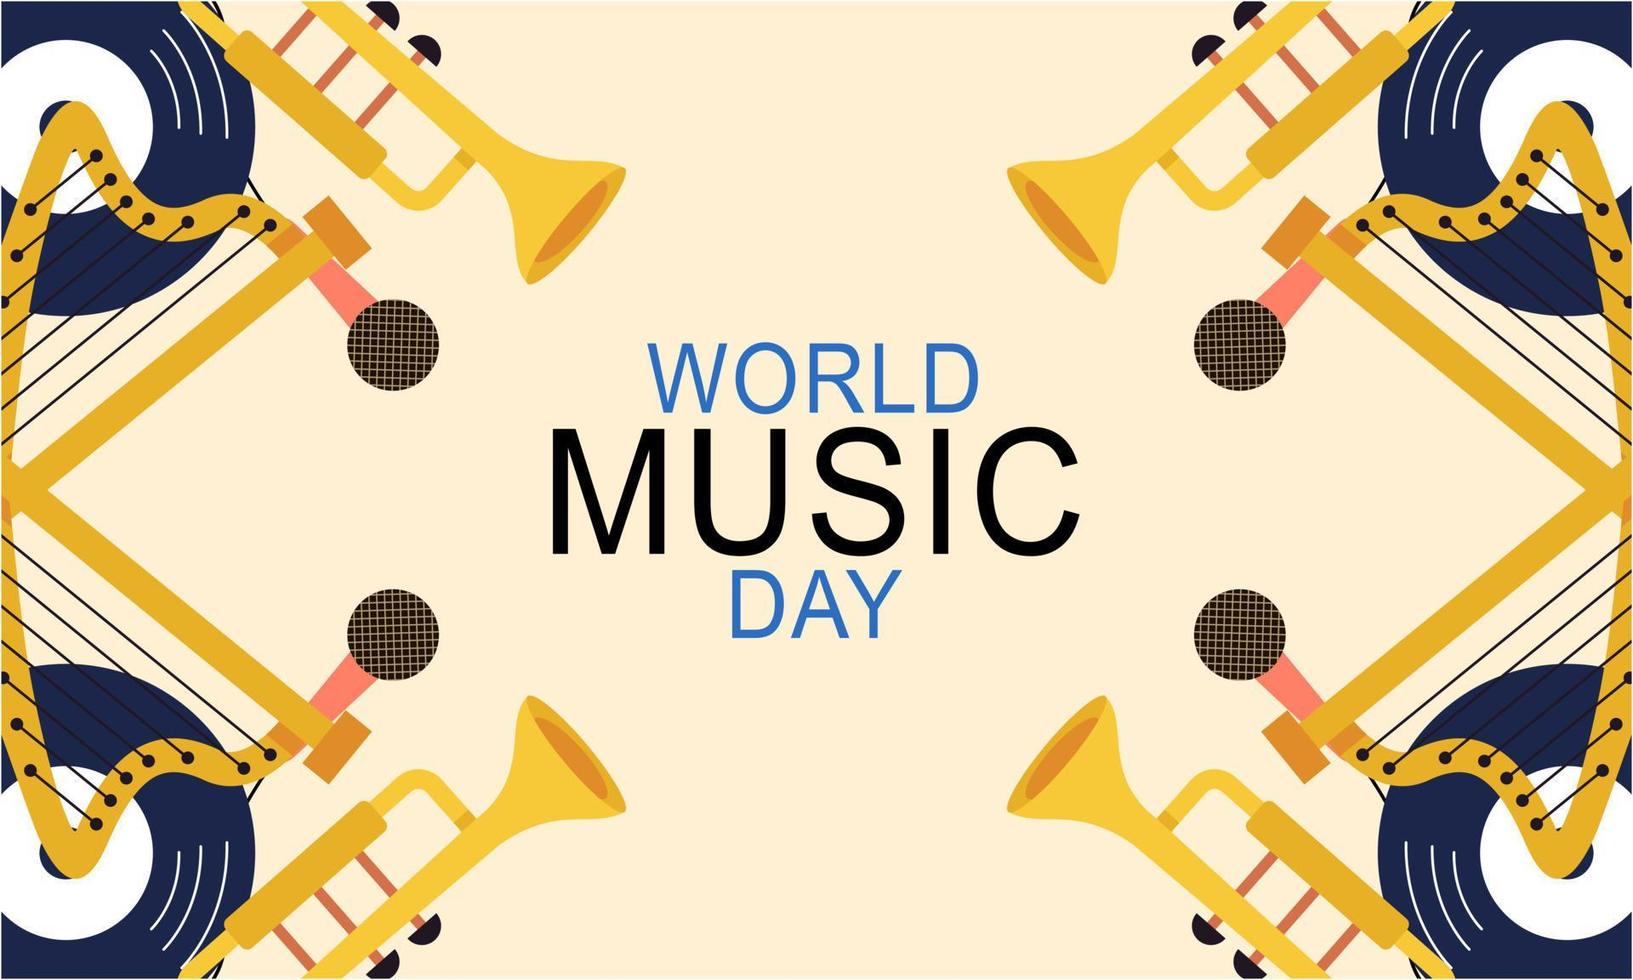 Welt Musik- Tag mit Musical Instrumente Vektor